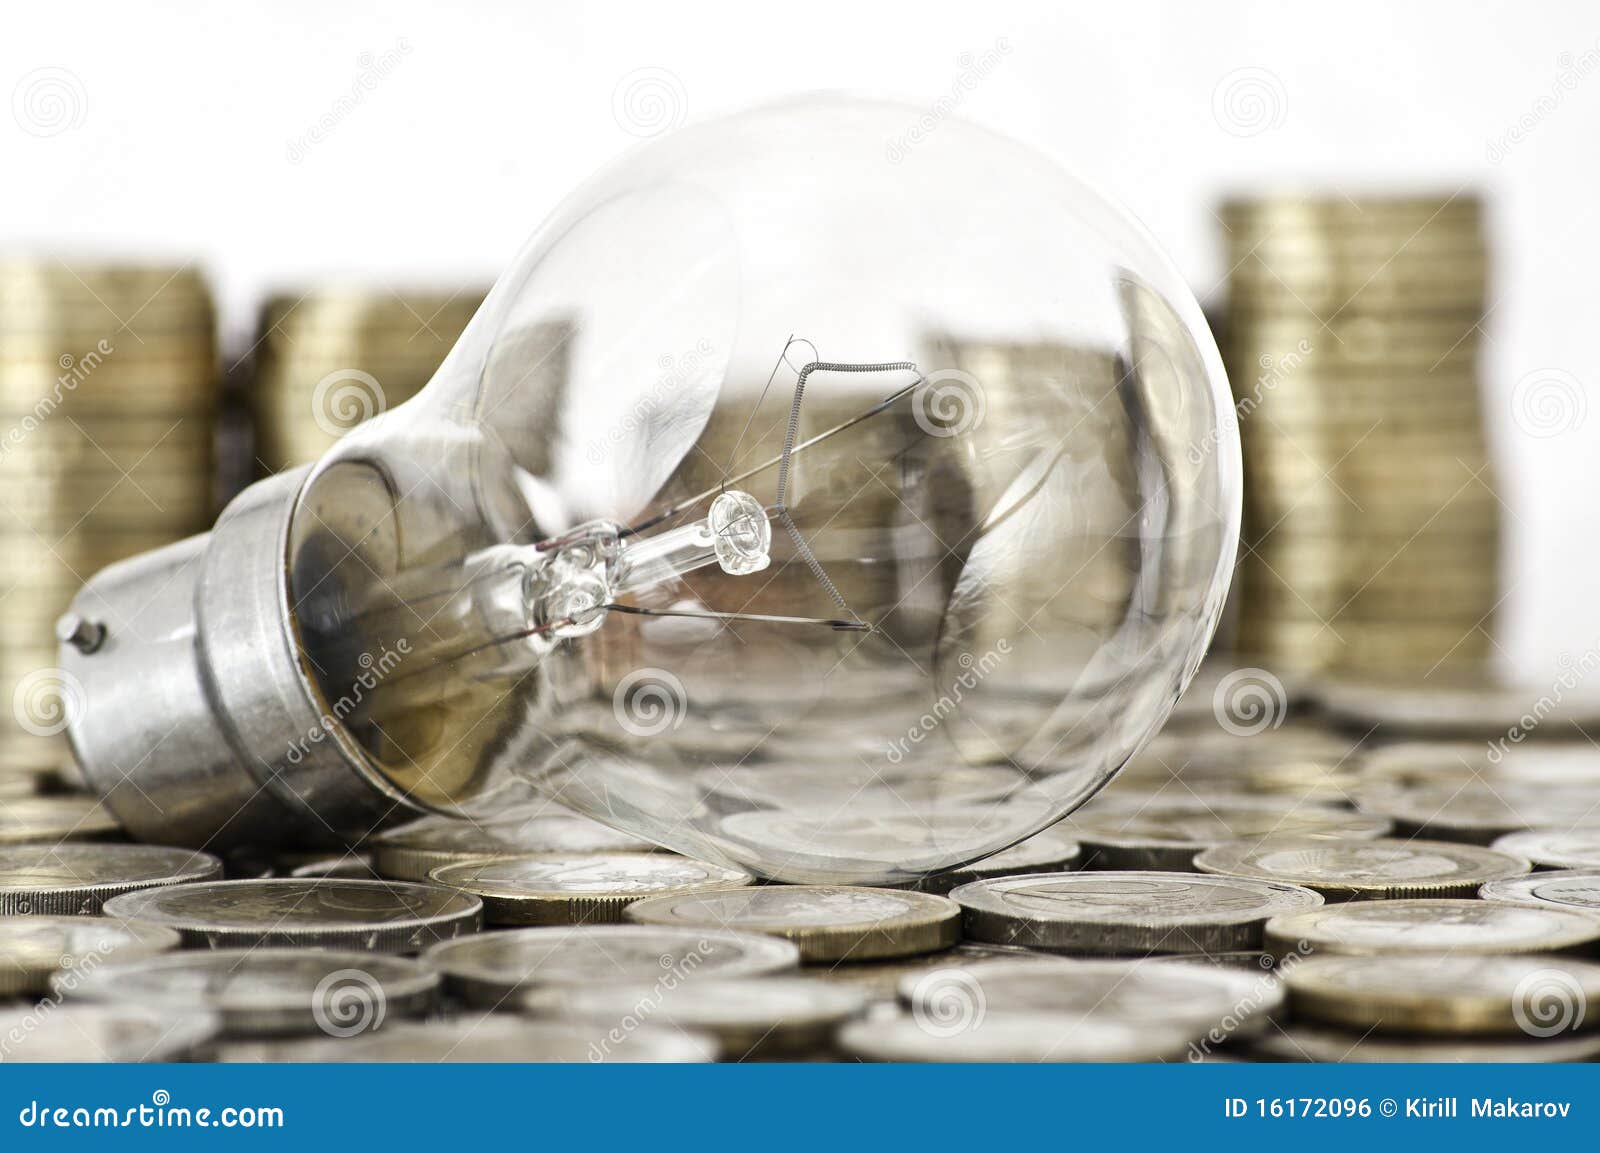 filament bulb lying on coins